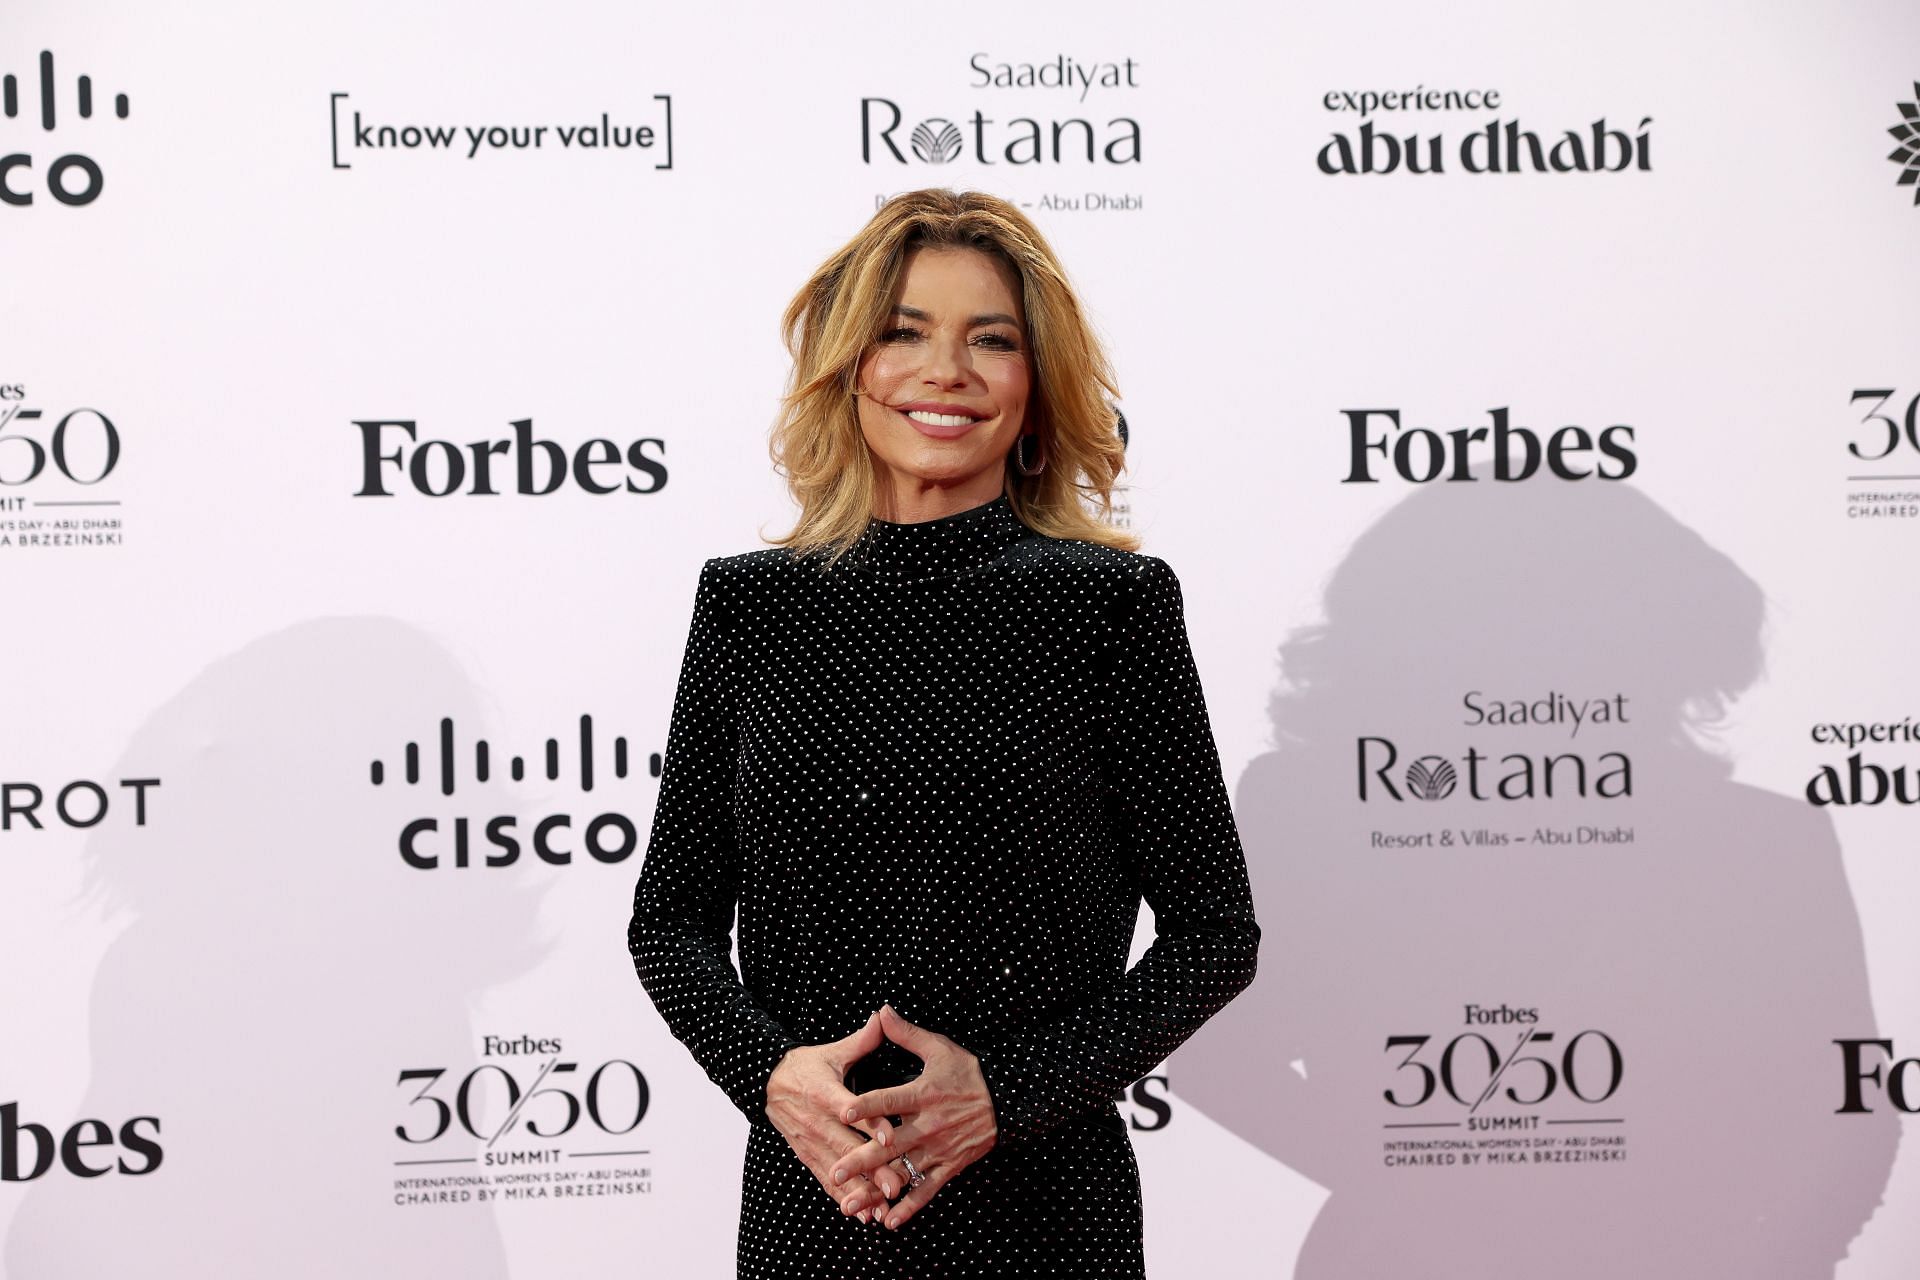 The Forbes 30/50 Summit International Women